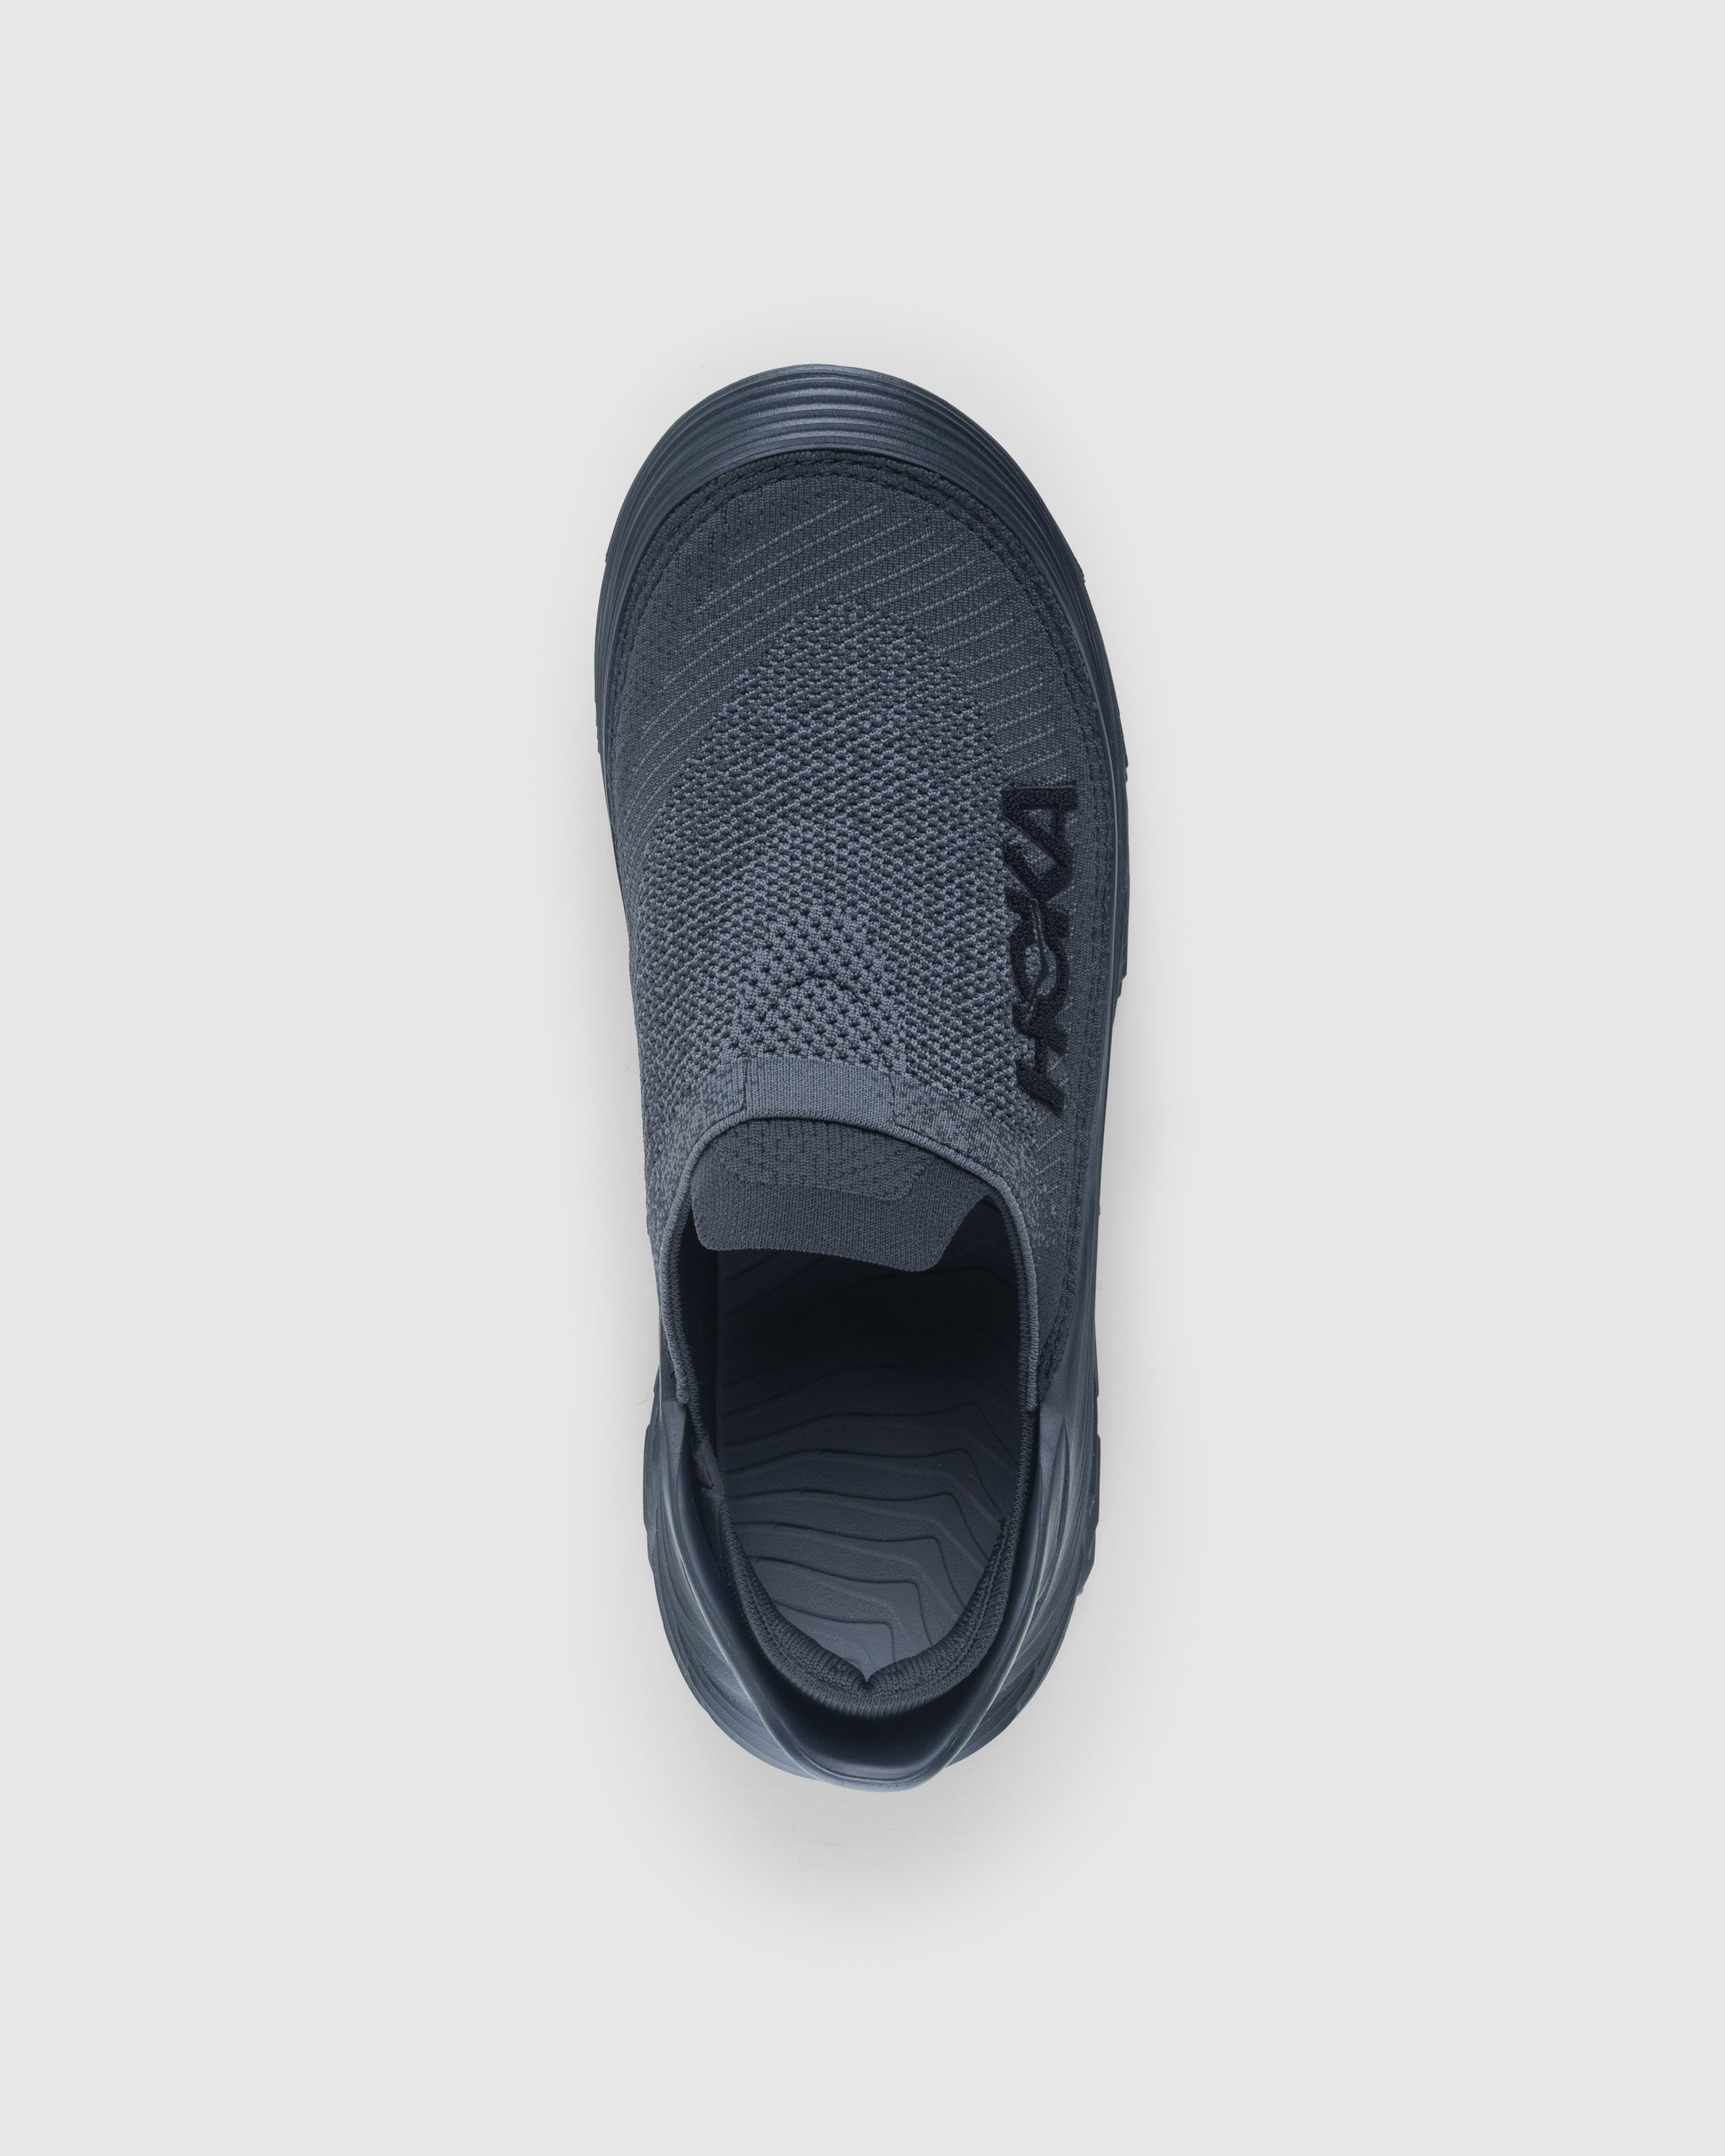 HOKA - Restore TC Black - Footwear - Black - Image 5